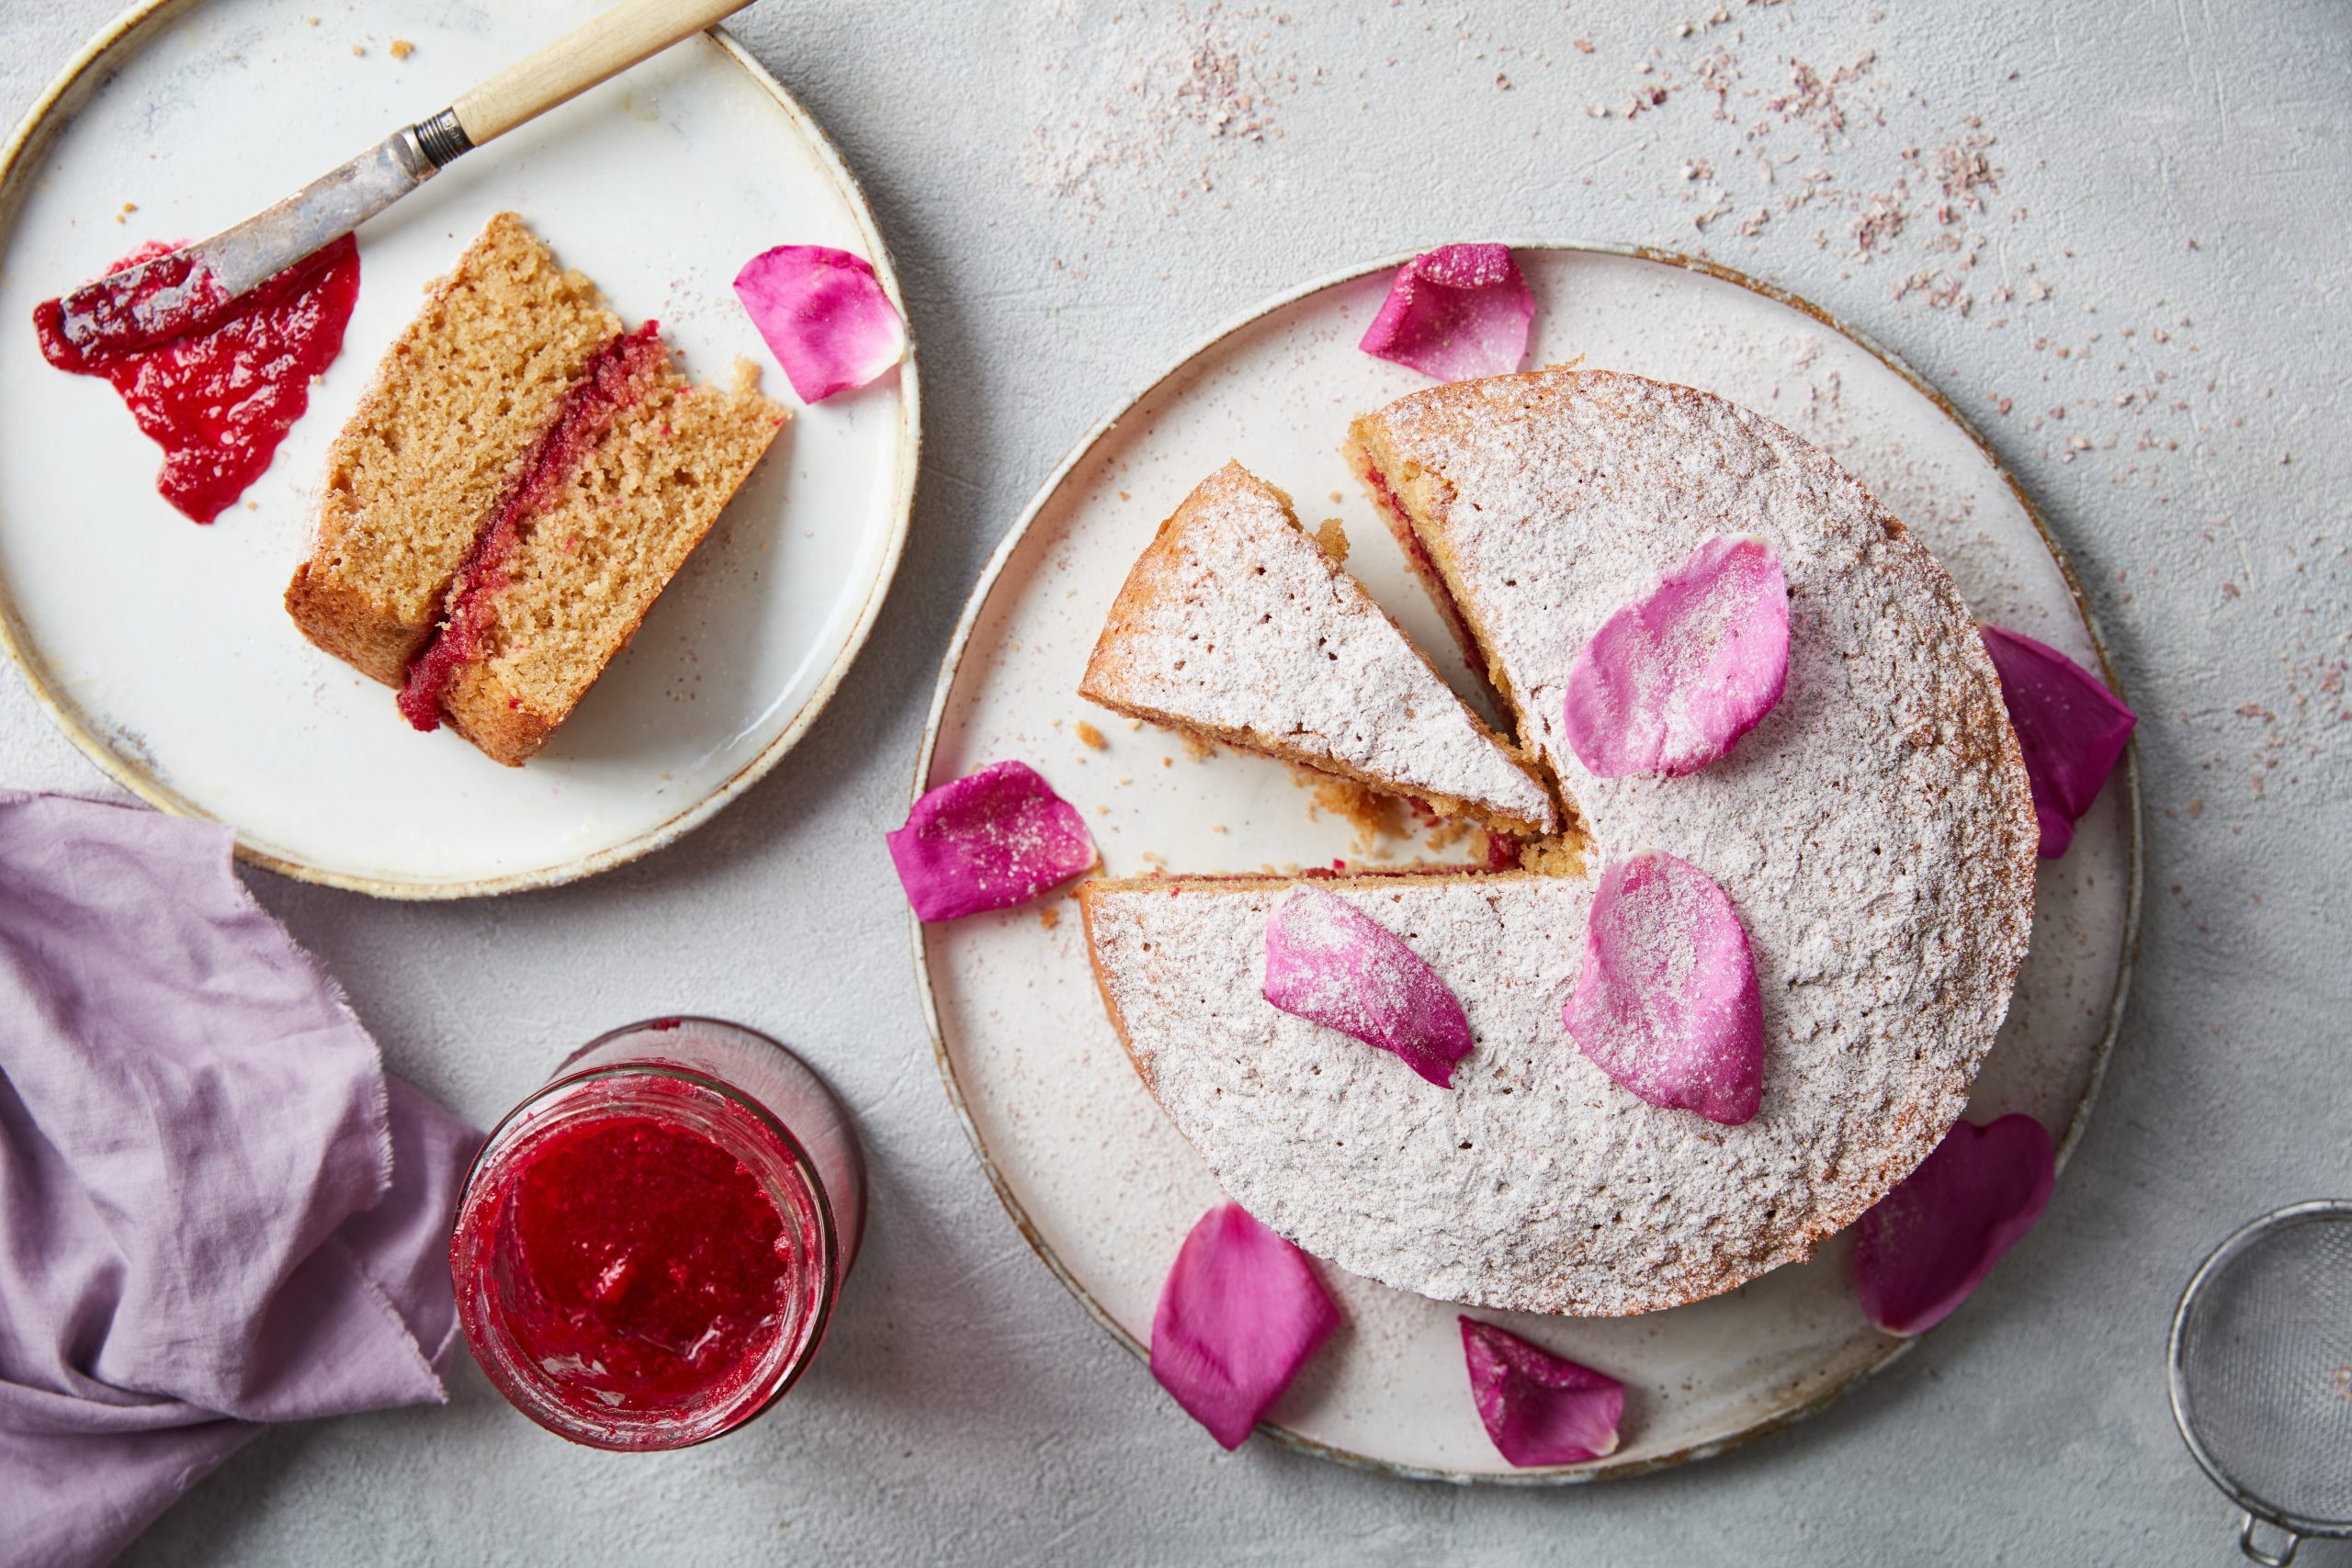 Homemade cake recipe with wild rose preserve by forager Rachel Lambert